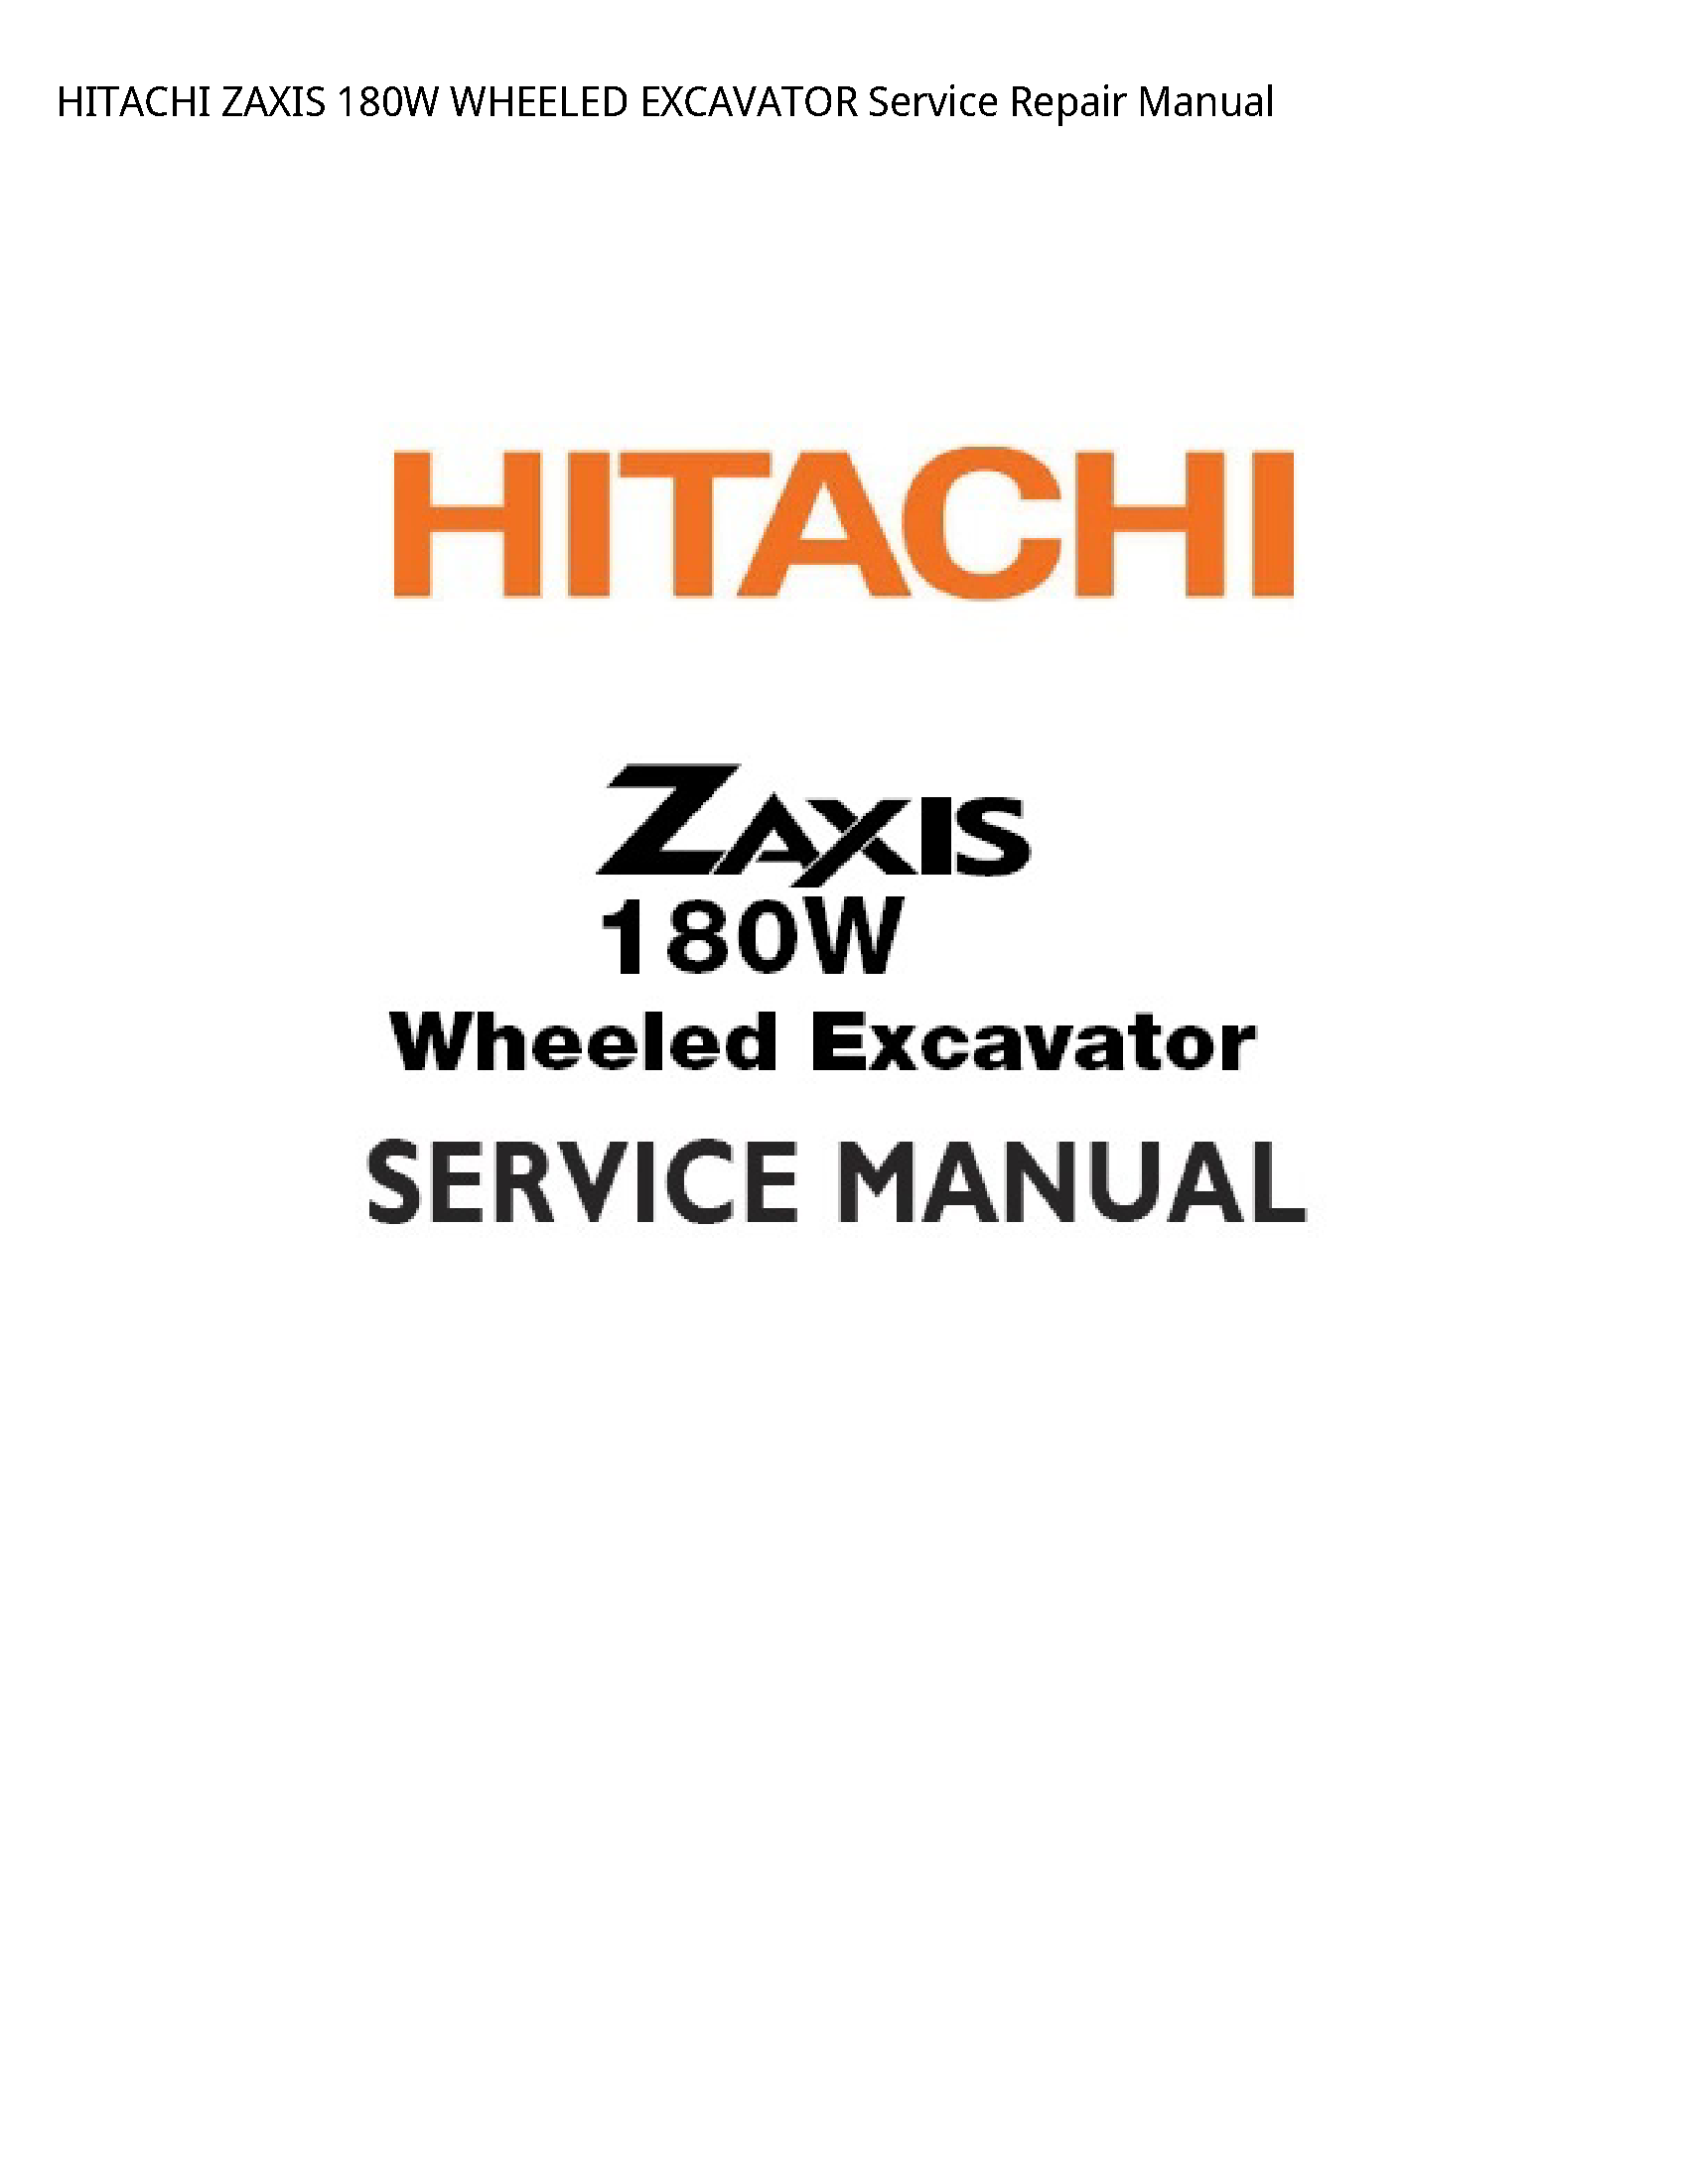 Hitachi 180W ZAXIS WHEELED EXCAVATOR manual